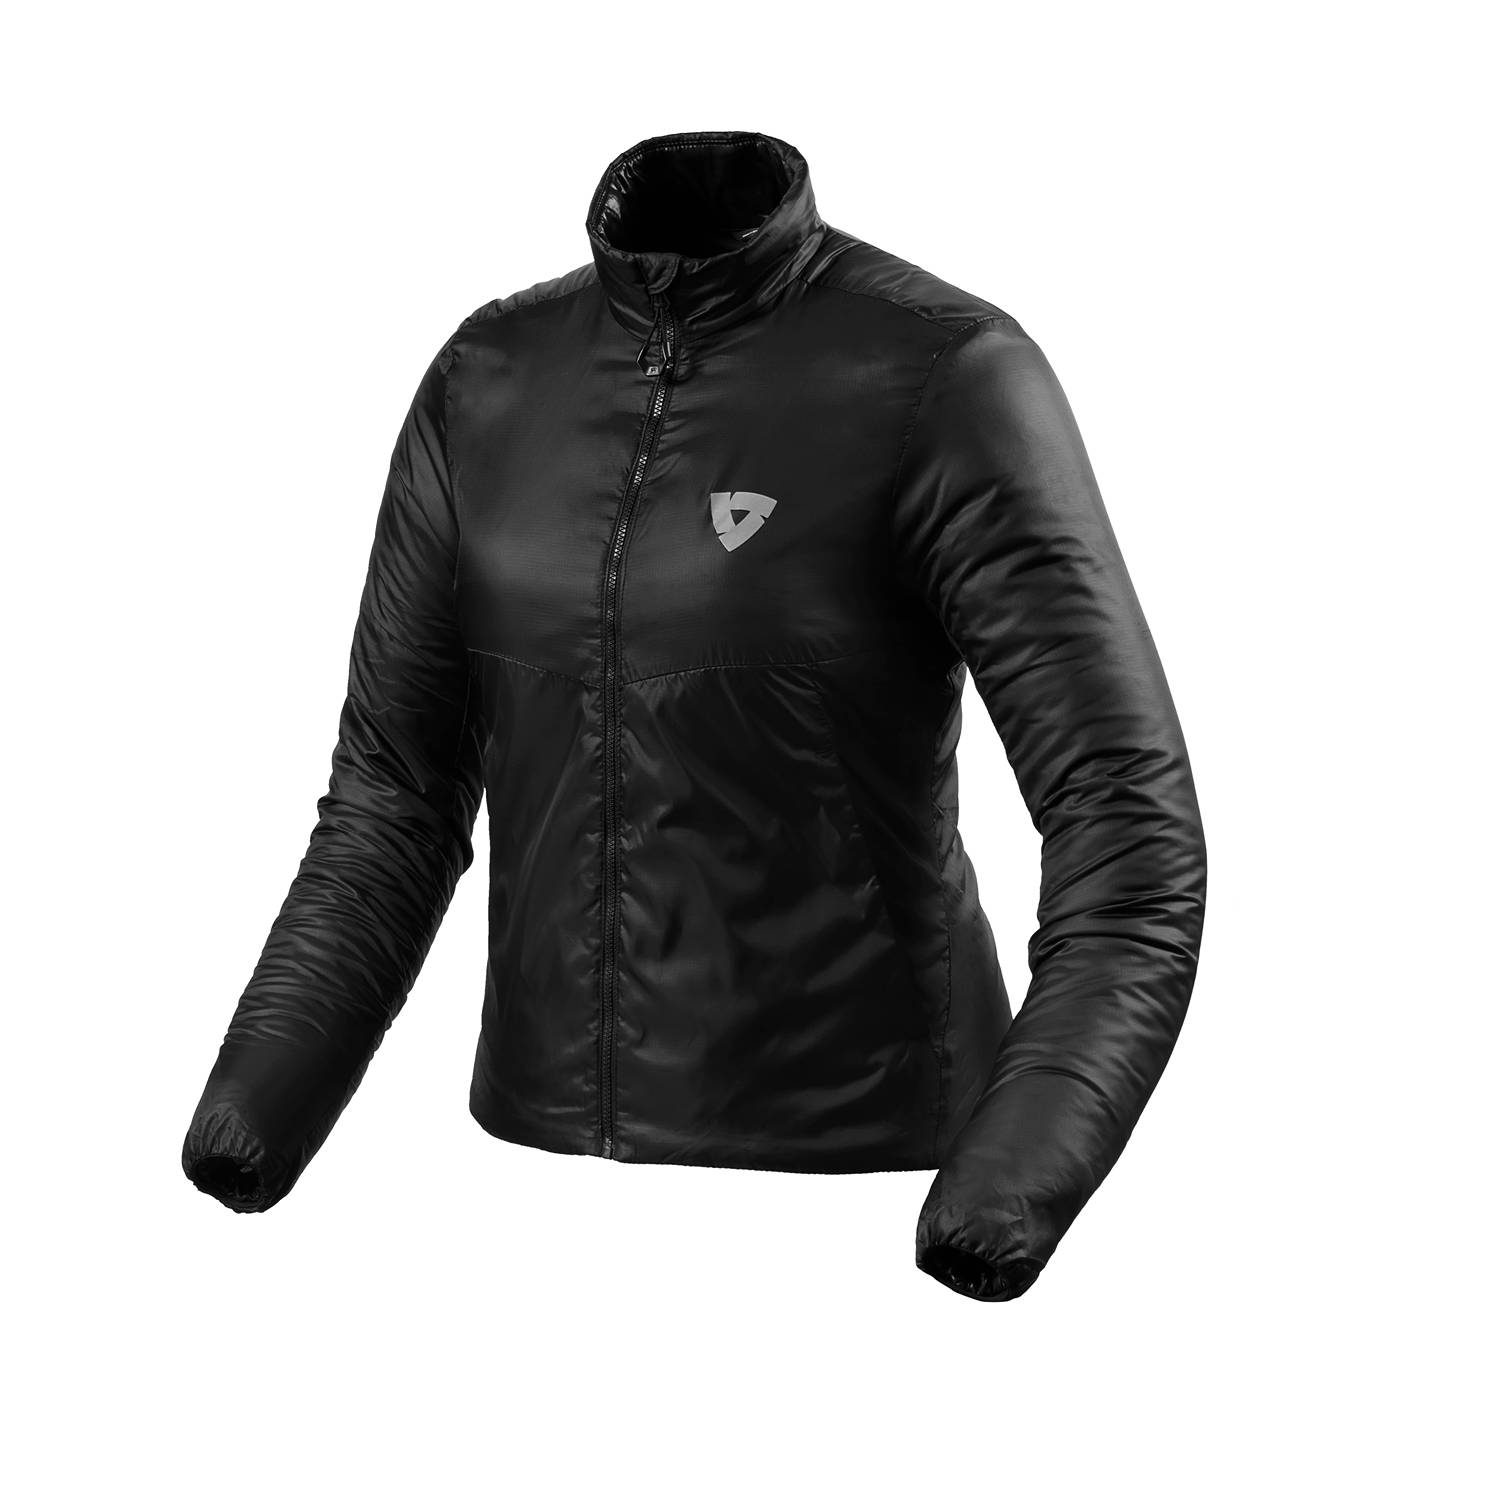 Image of REV'IT! Core 2 Ladies Mid Layer Jacket Black Größe S